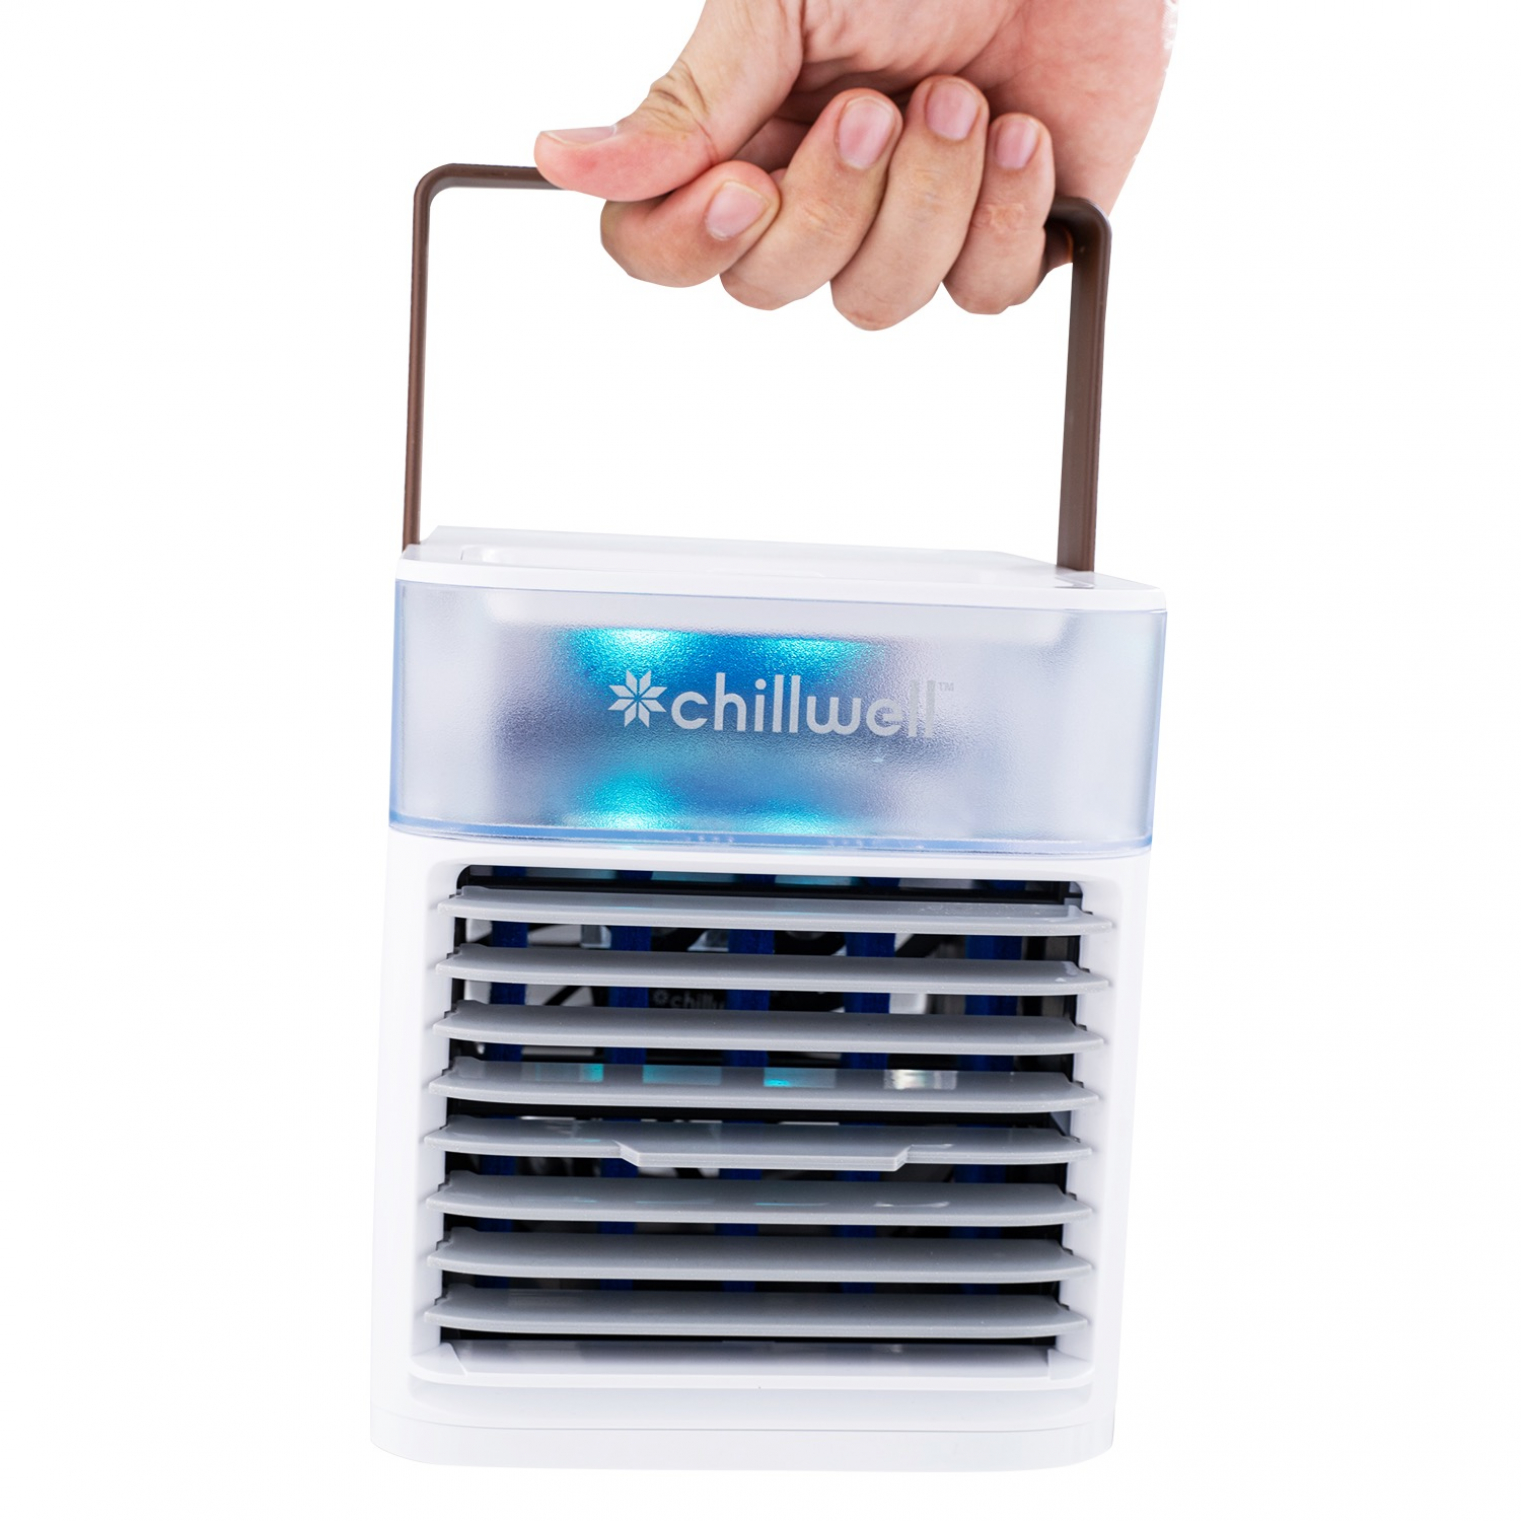 Small Chillwell Ac Conditioner